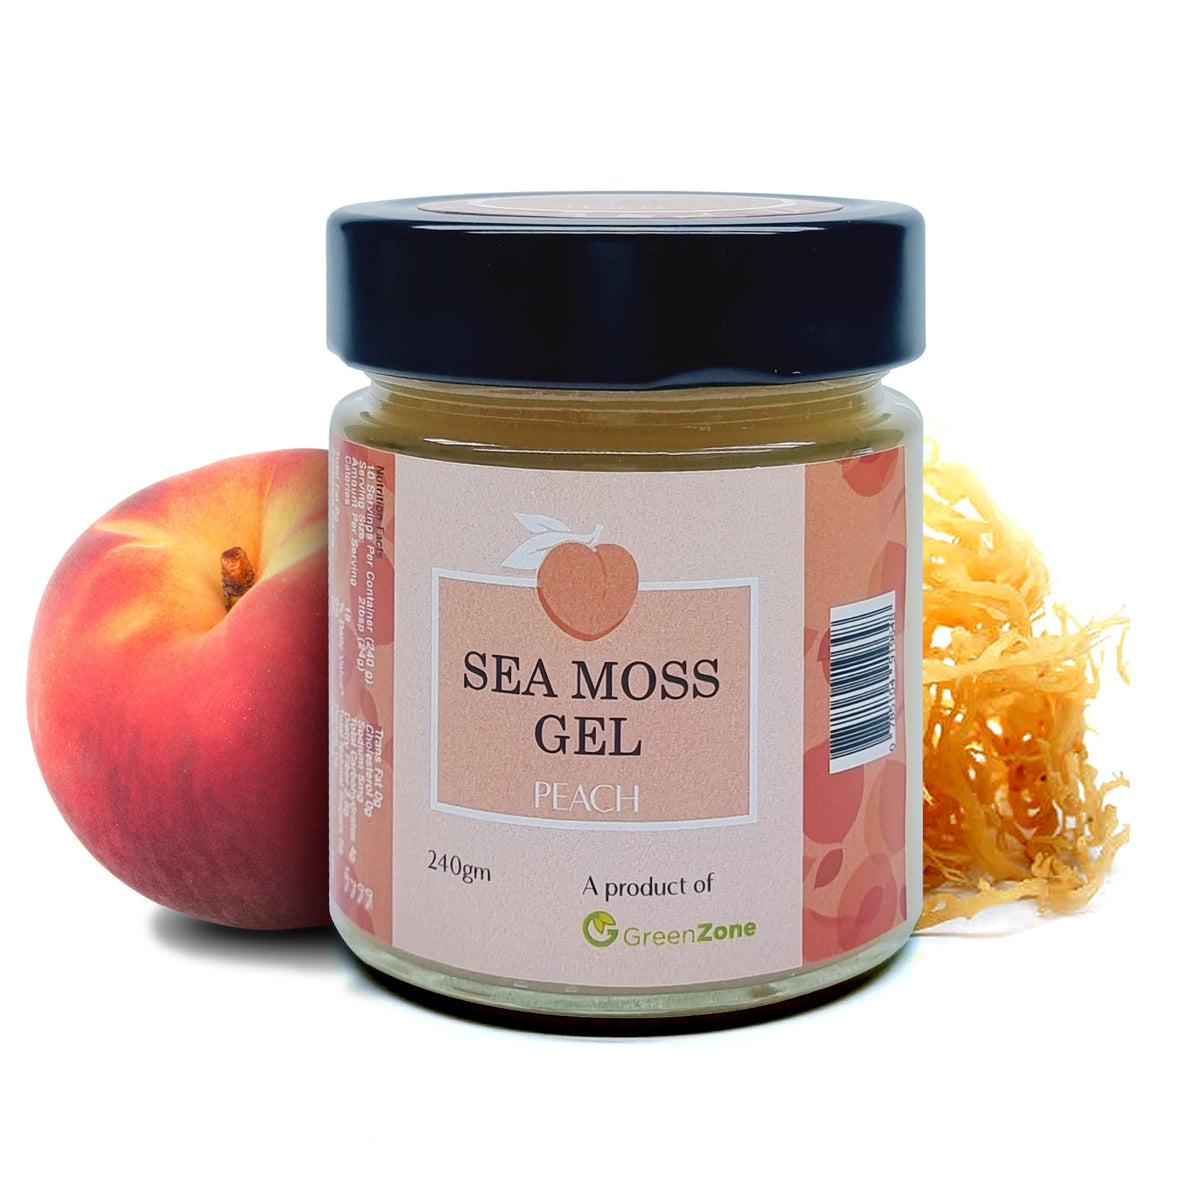 Sea Moss Gel with Peach (240g)